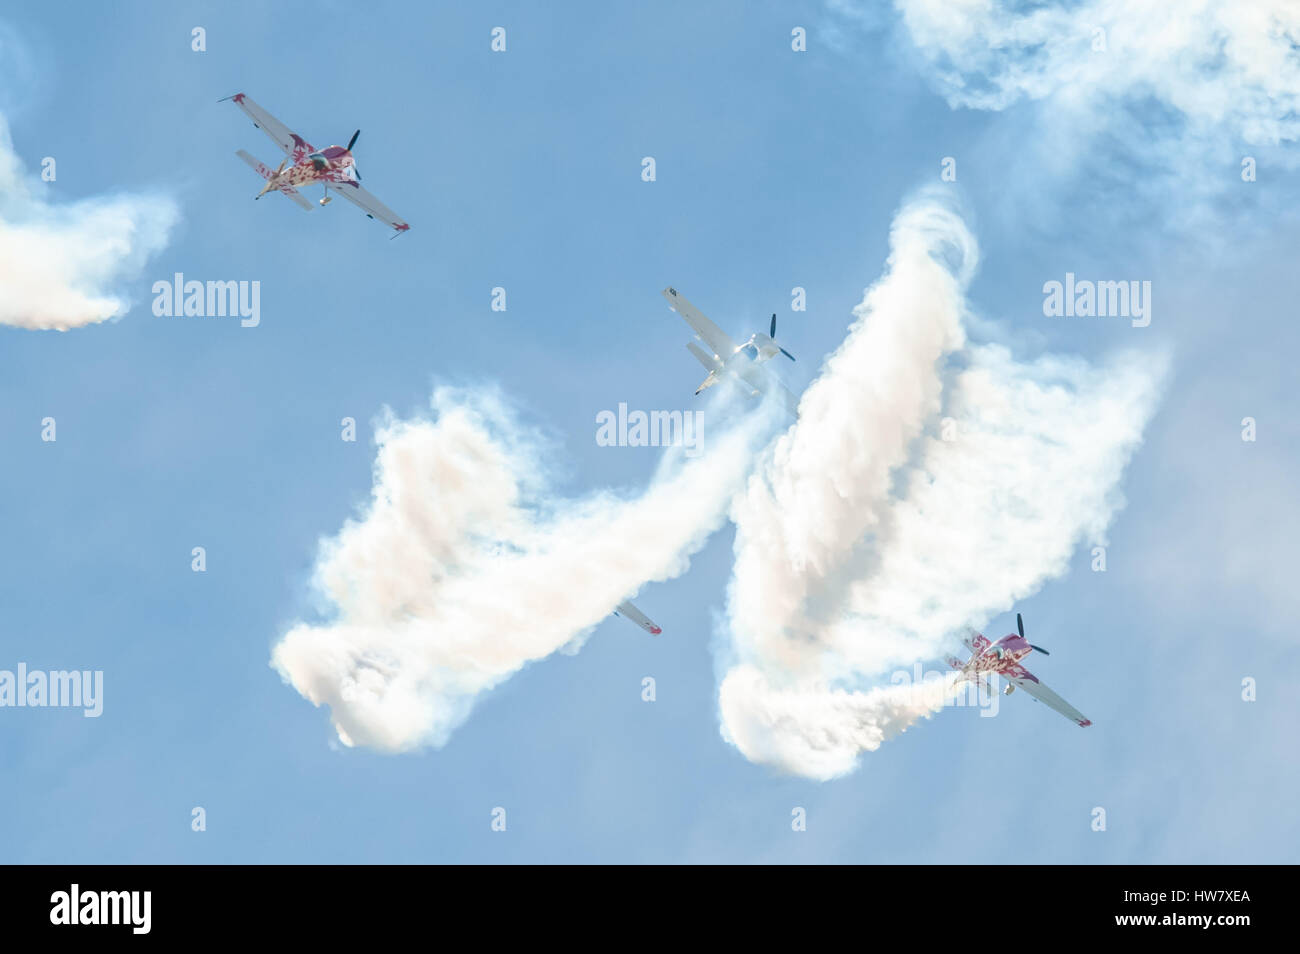 Global Stars formation aerobatic display team in the skies over Farnborough, Hampshire, UK Stock Photo